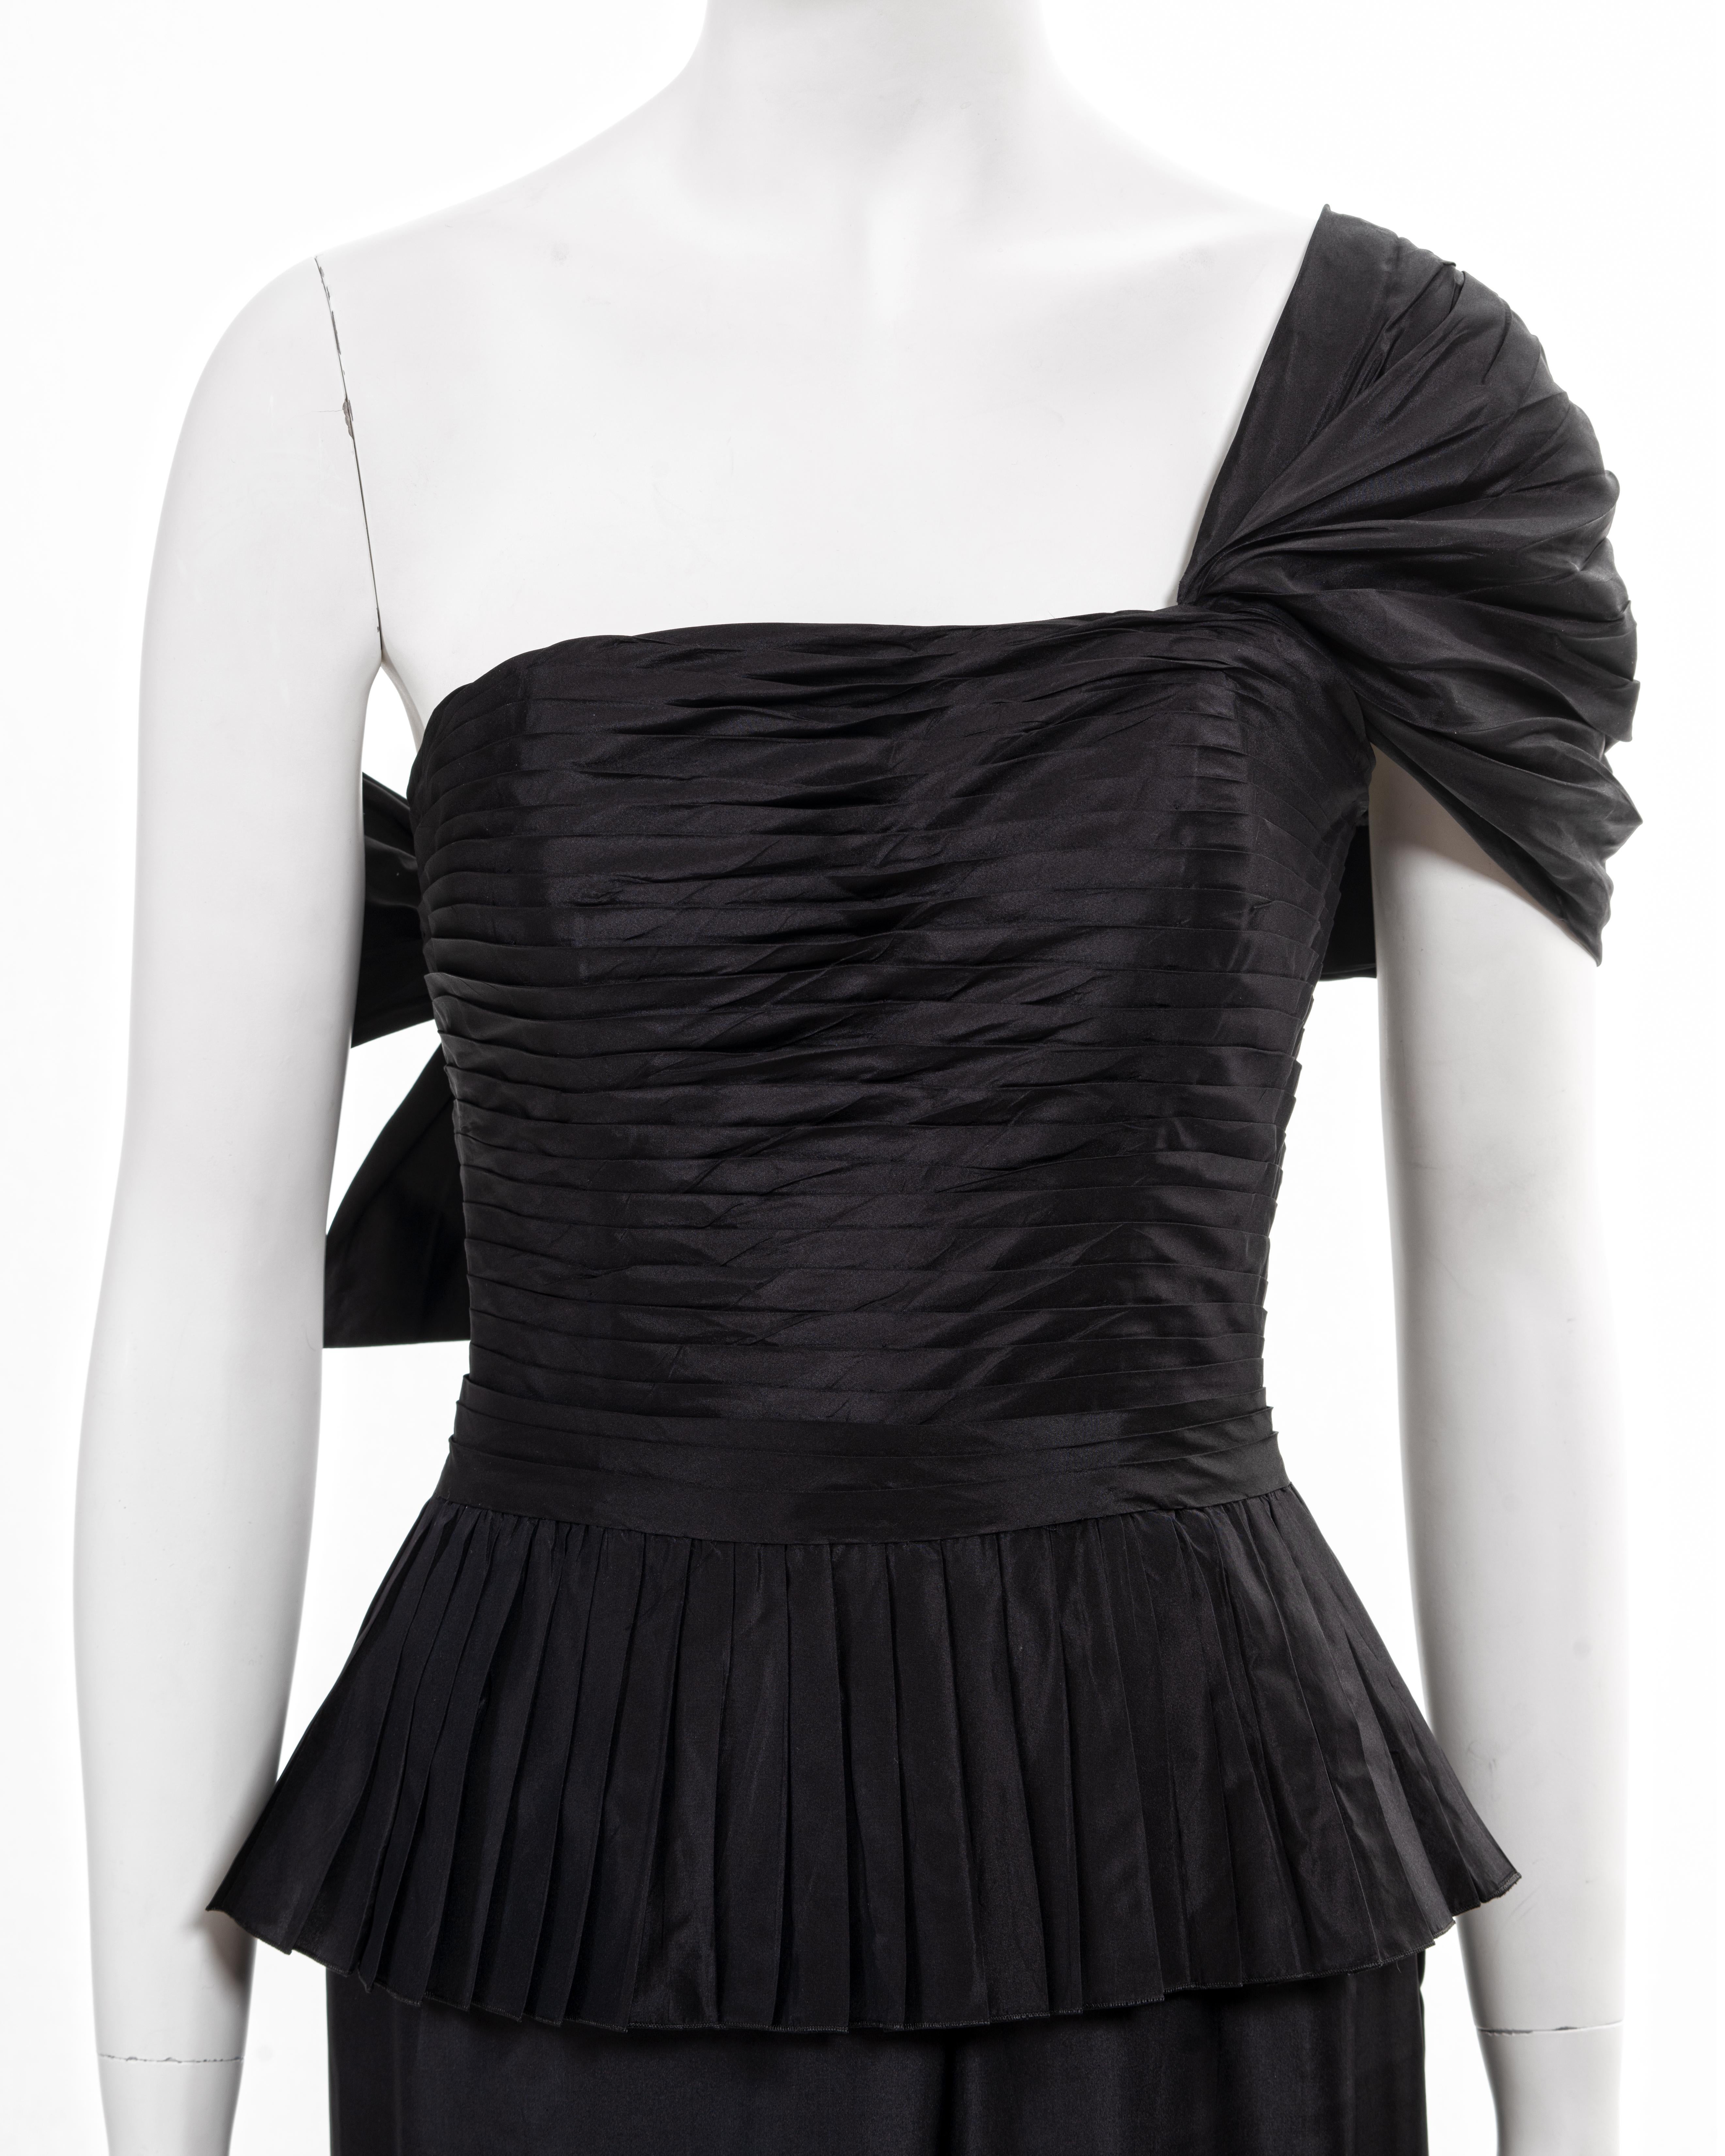 Chanel by Karl Lagerfeld black silk taffeta evening dress, ss 1986 For Sale 2